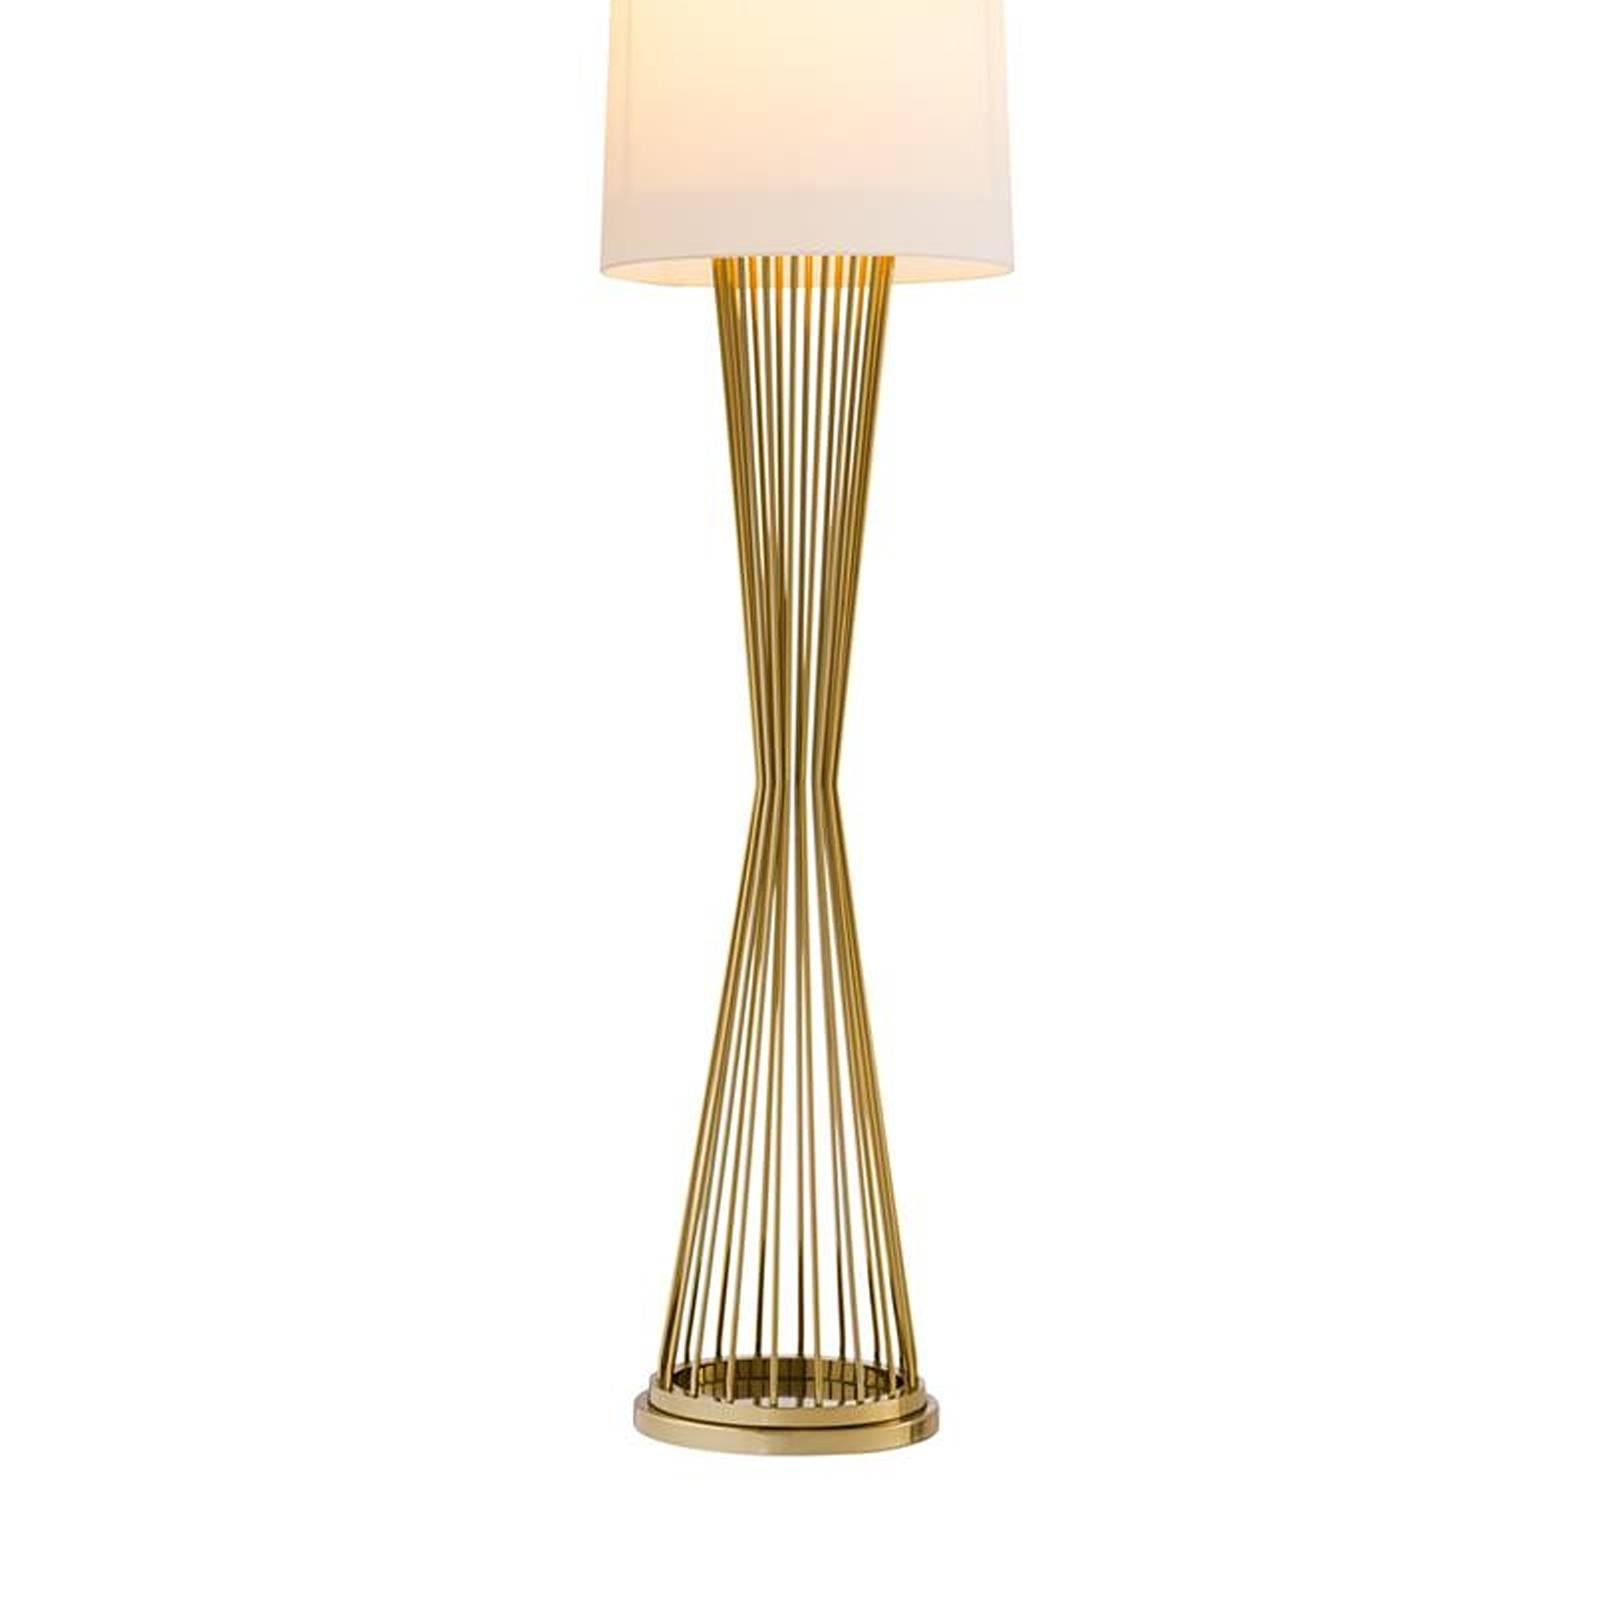 Dutch Barnet Floor Lamp in Gold or Nickel Finish